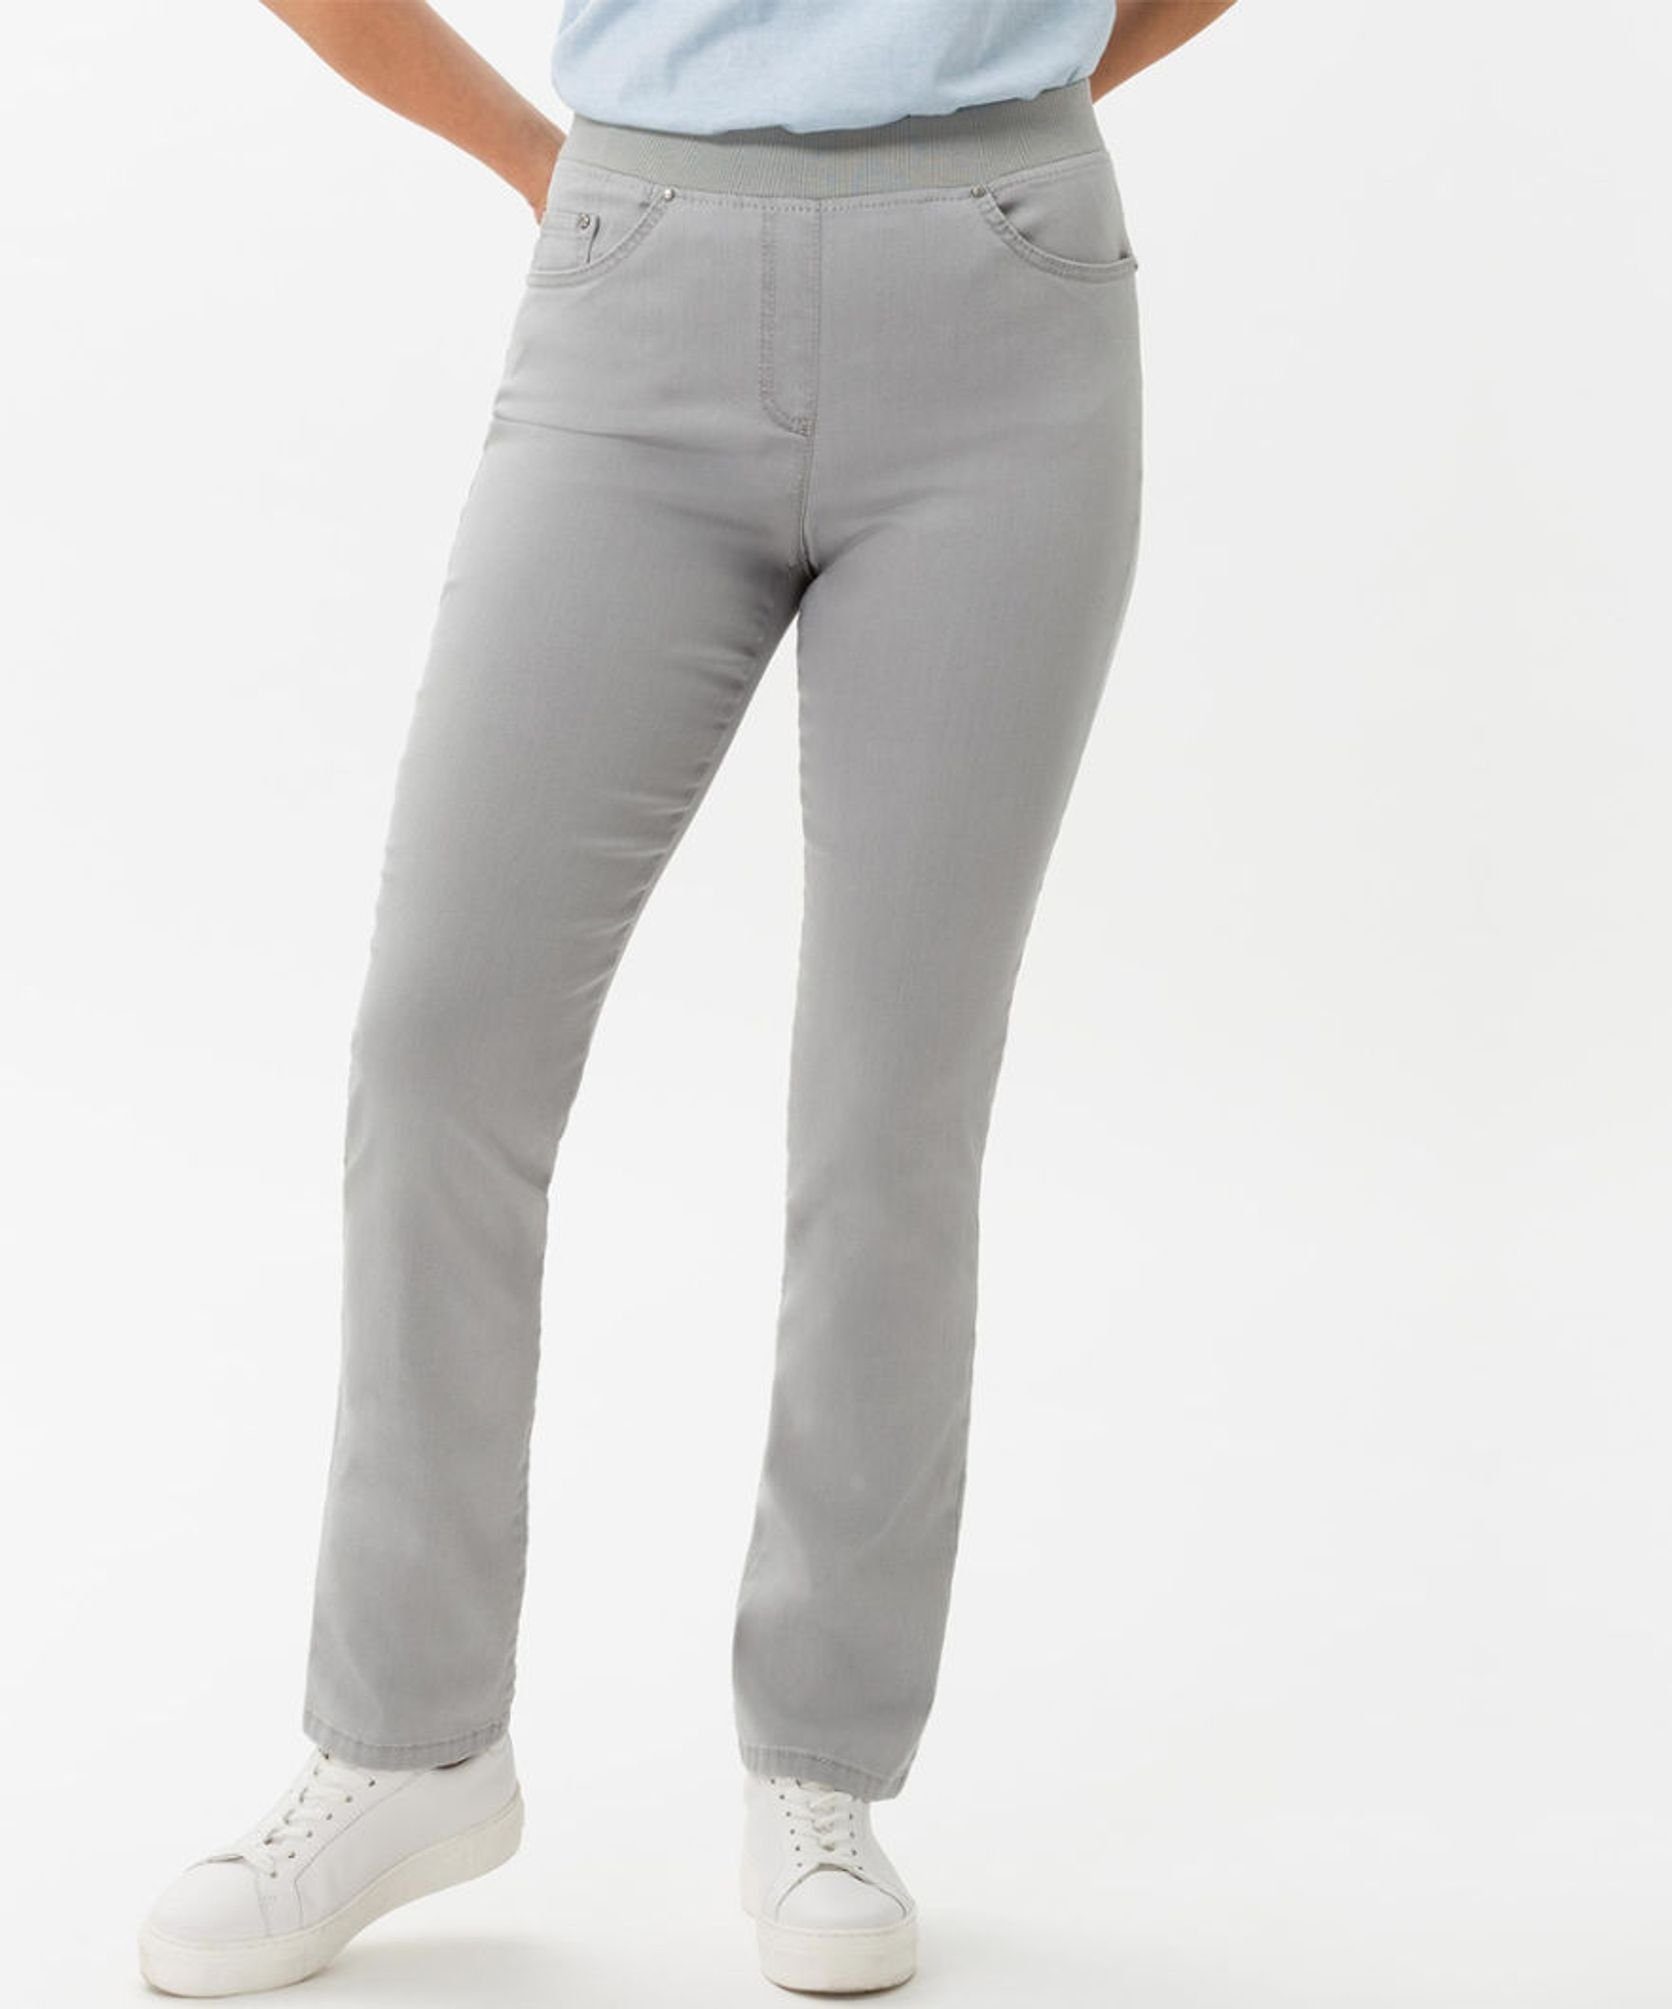 RAPHAELA by BRAX light 14-6227 (03) grey 5-Pocket-Jeans